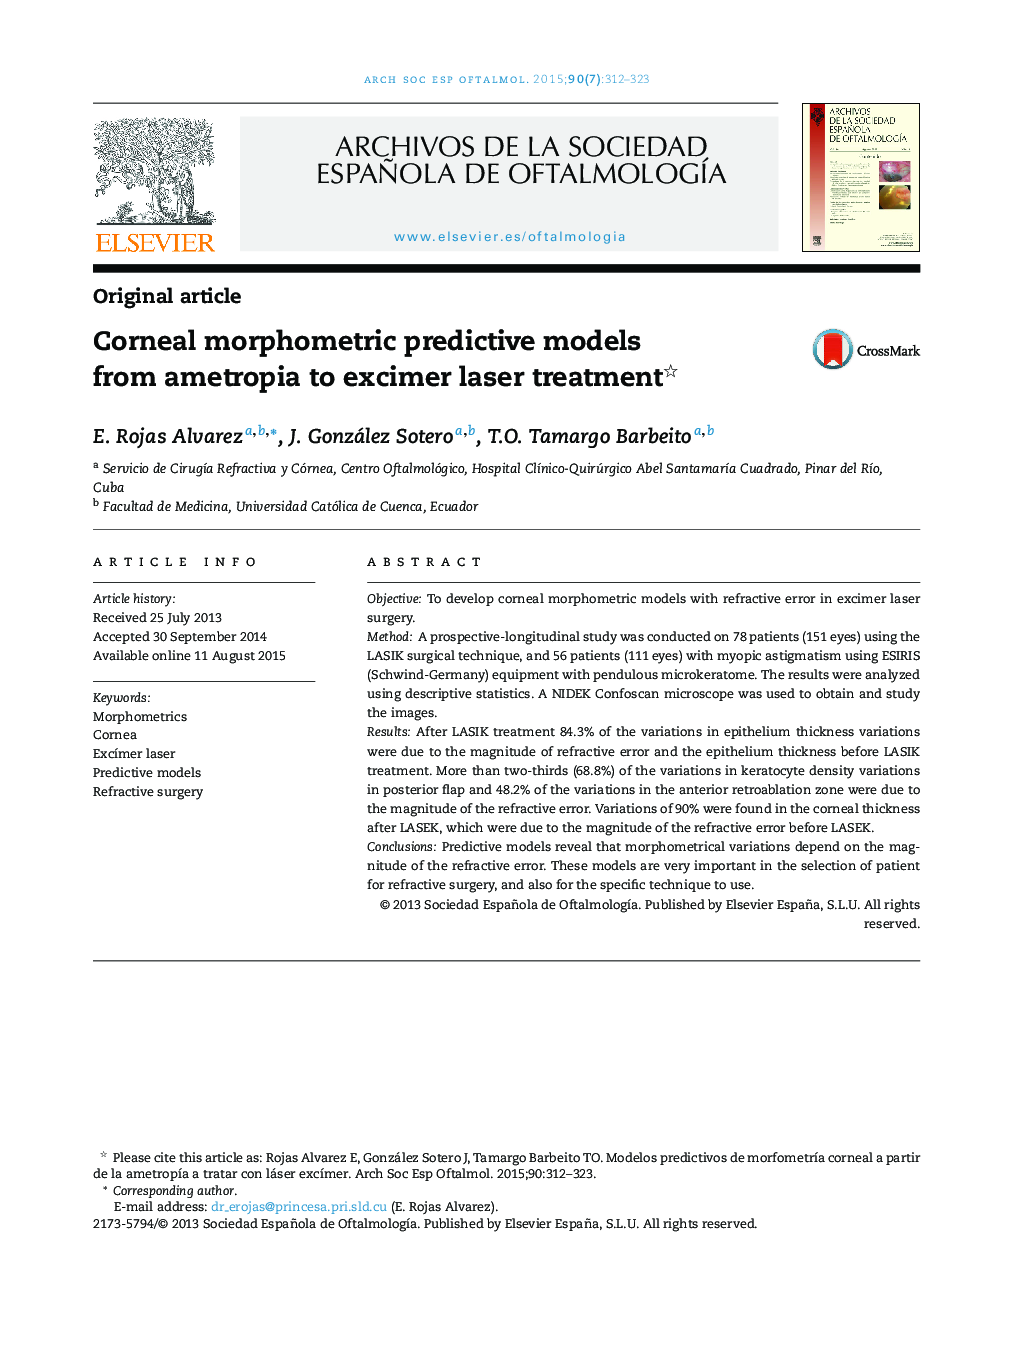 Corneal morphometric predictive models from ametropia to excimer laser treatment 